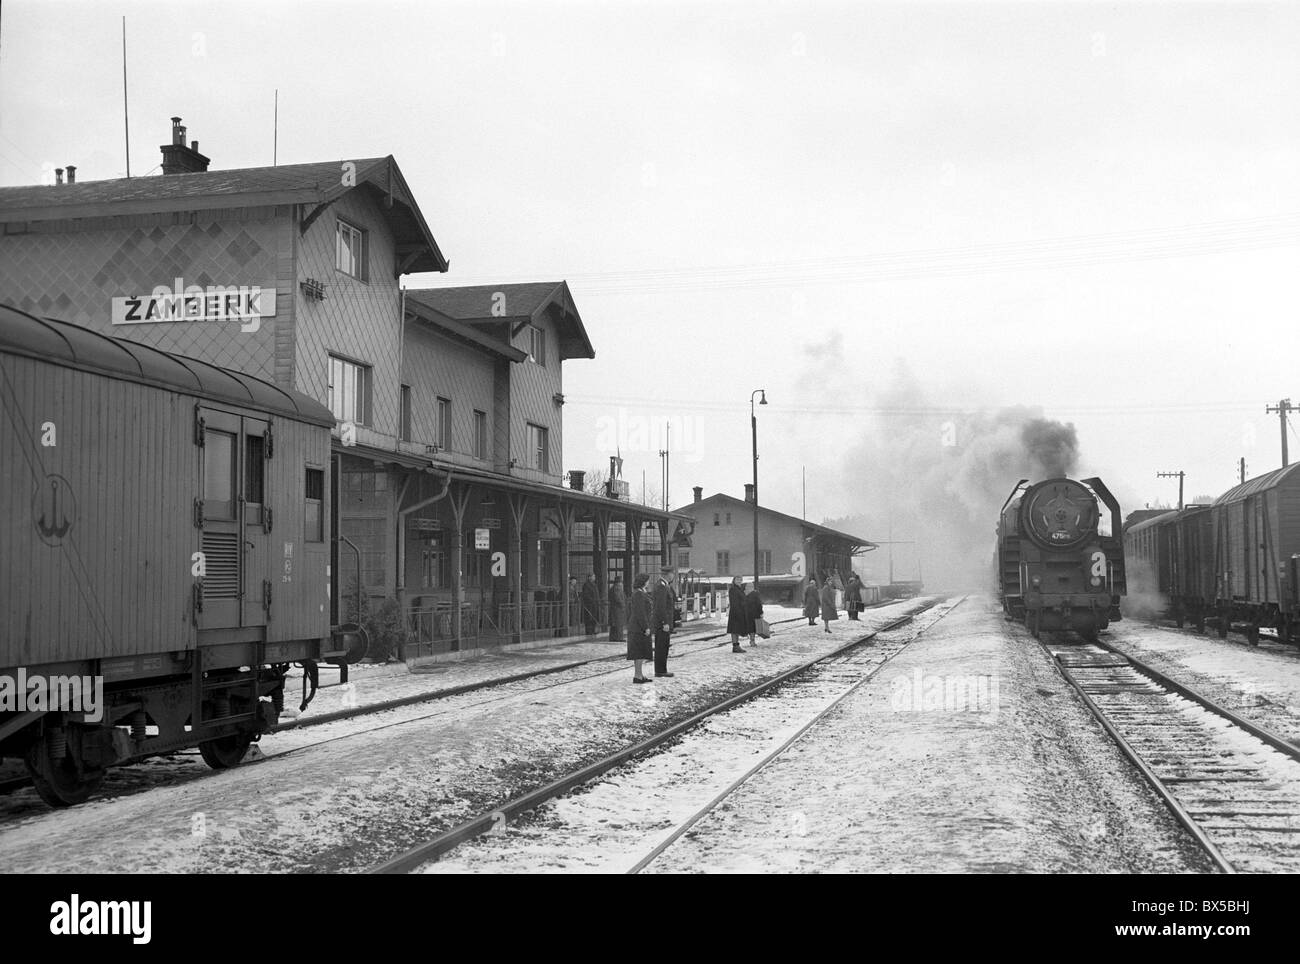 Snow covered train station with steam locomotive arriving in Zamberk, Czechoslovakia 1960. (CTK Photo / Bedrich Krejci) Stock Photo